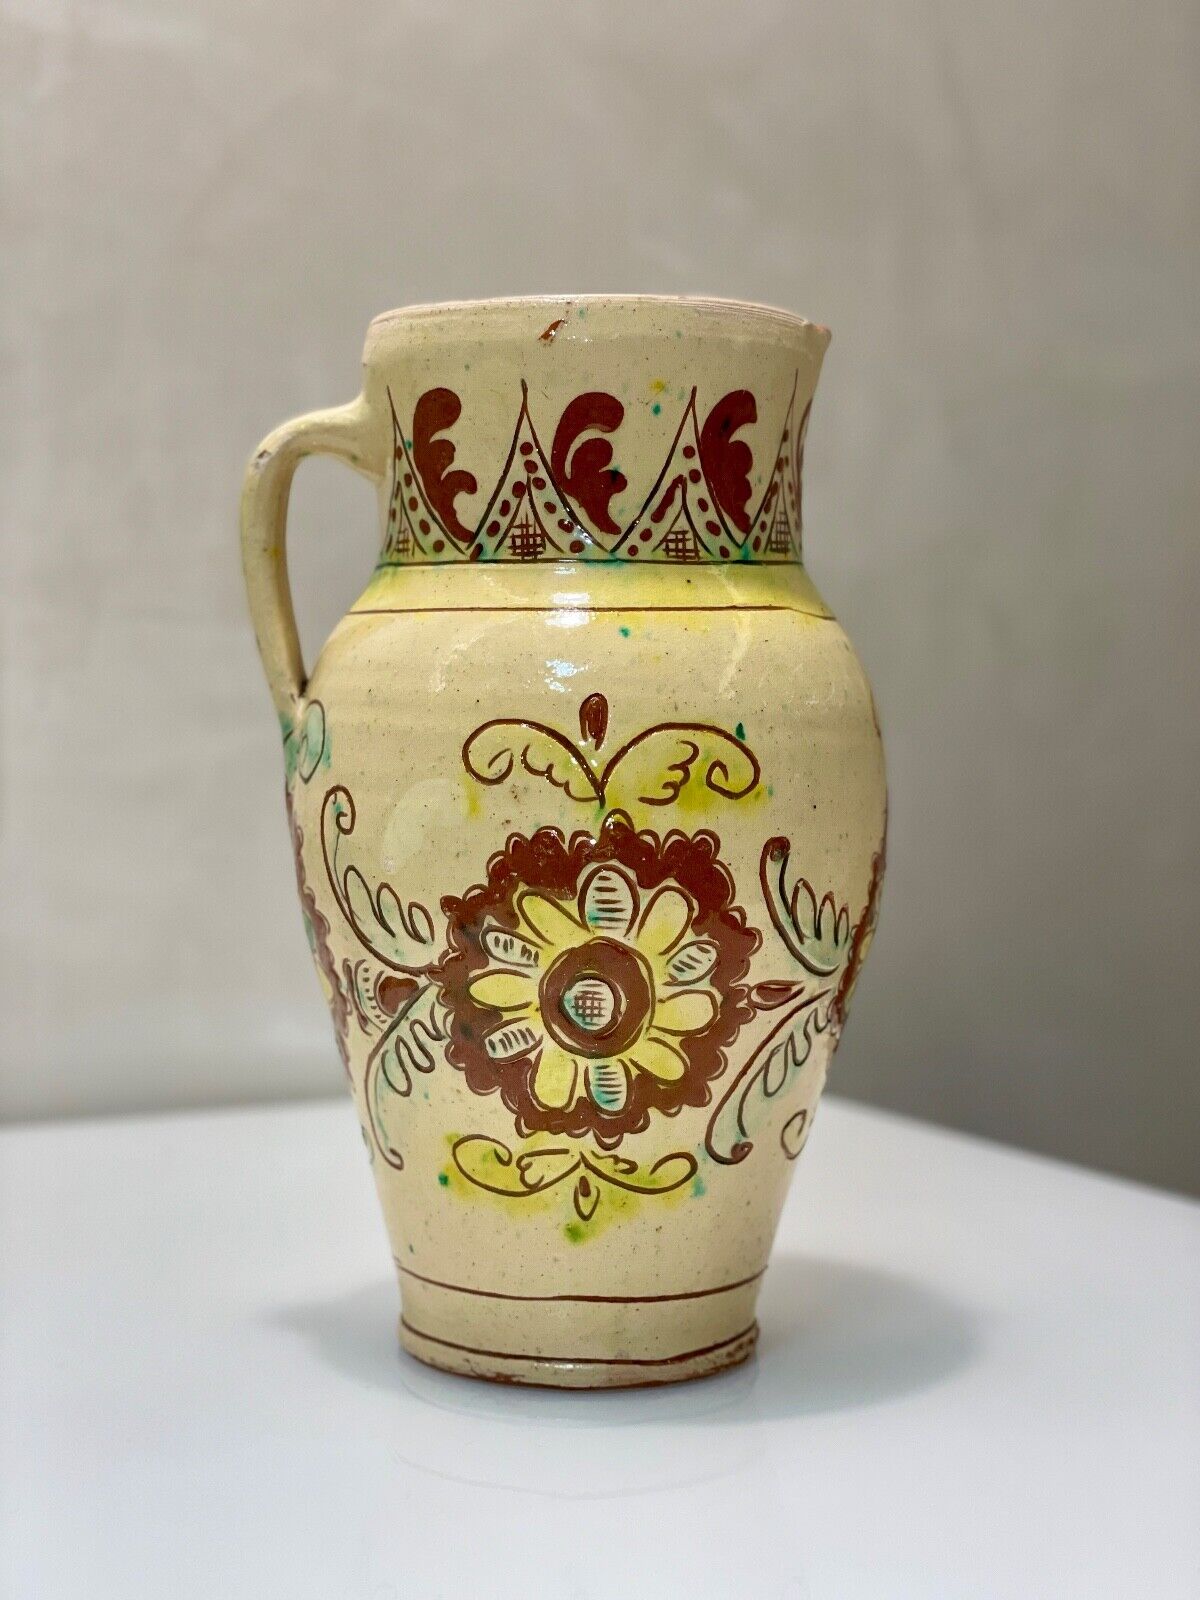 Ukrainian vintage ceramics from the 1950s-1970s. Kosiv ceramics